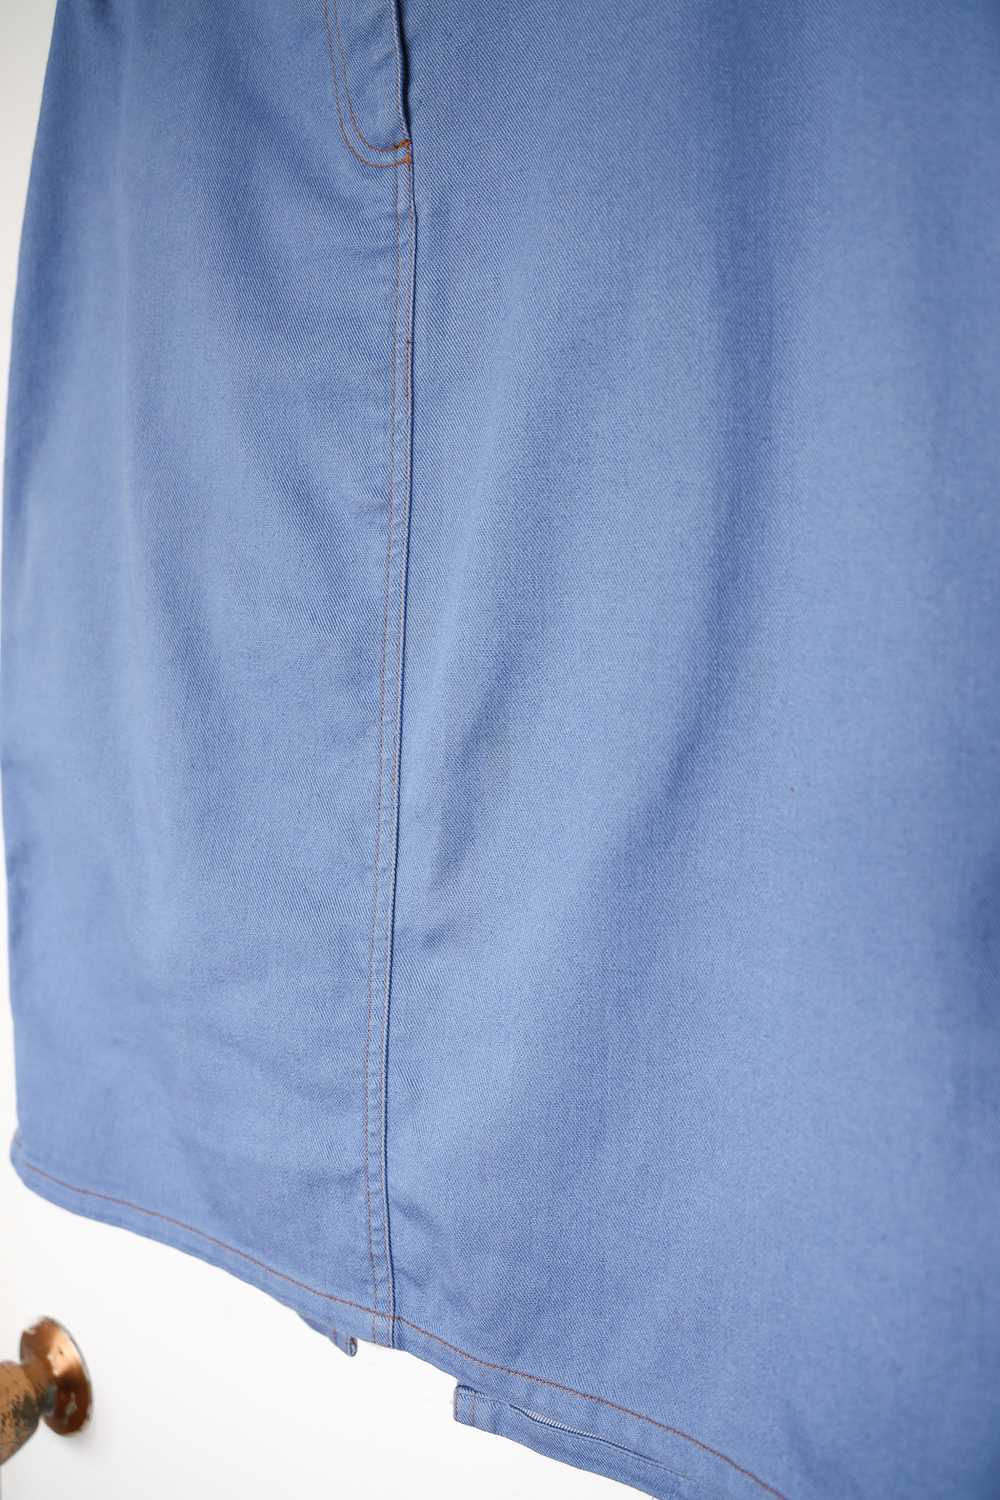 Cornflower Blue Pencil Skirt / Size 8 - image 7